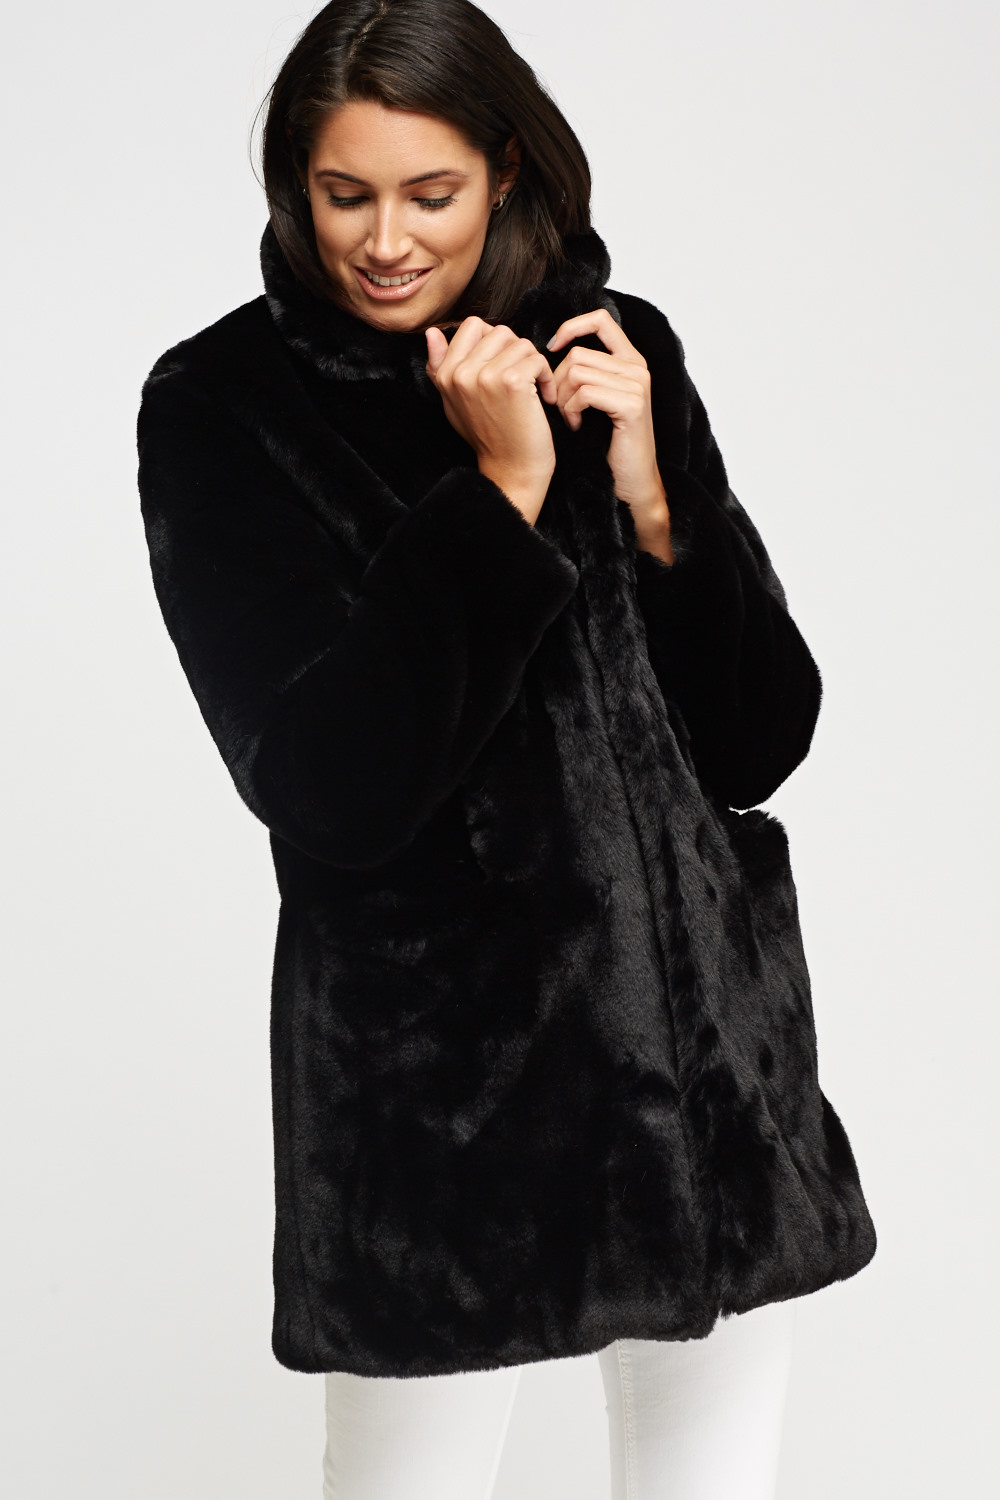 K.ZELL Black Teddy Bear Faux Fur Coat - Limited edition | Discount ...